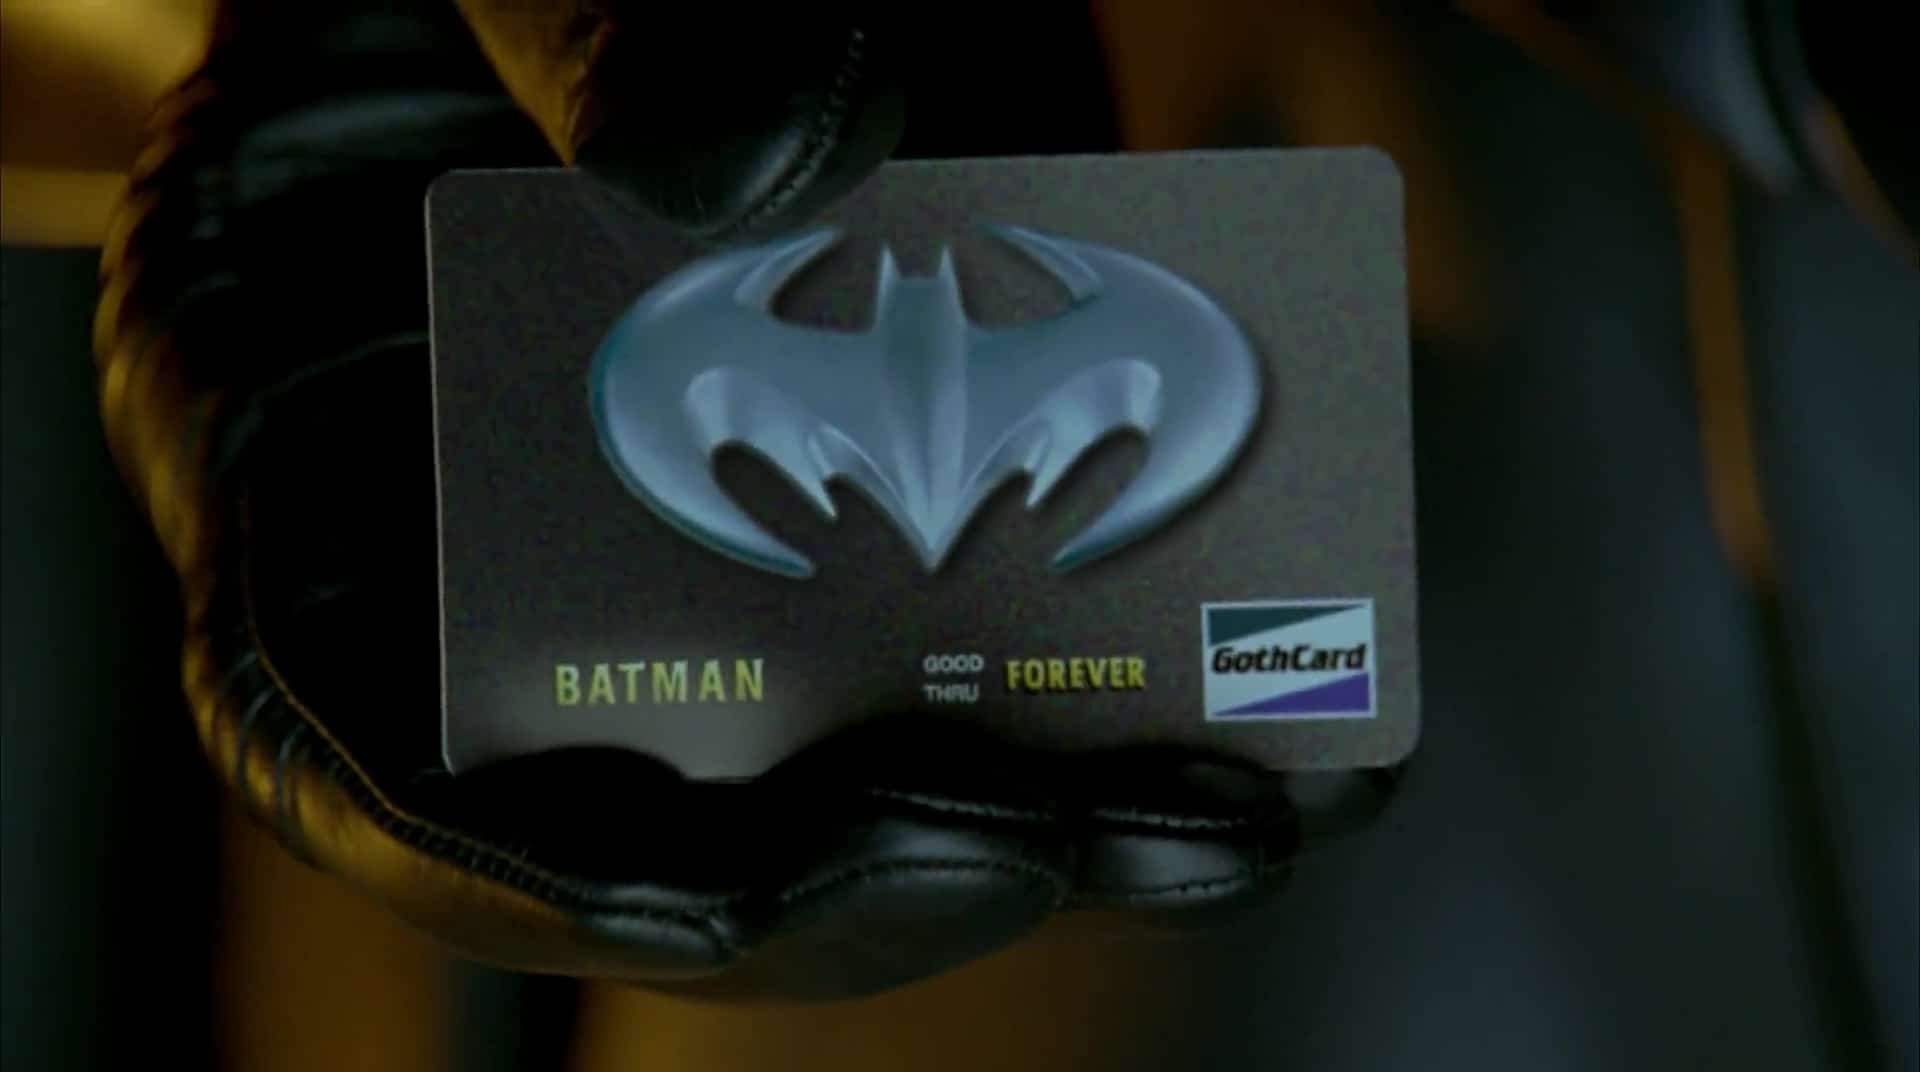 Bat Credit Card